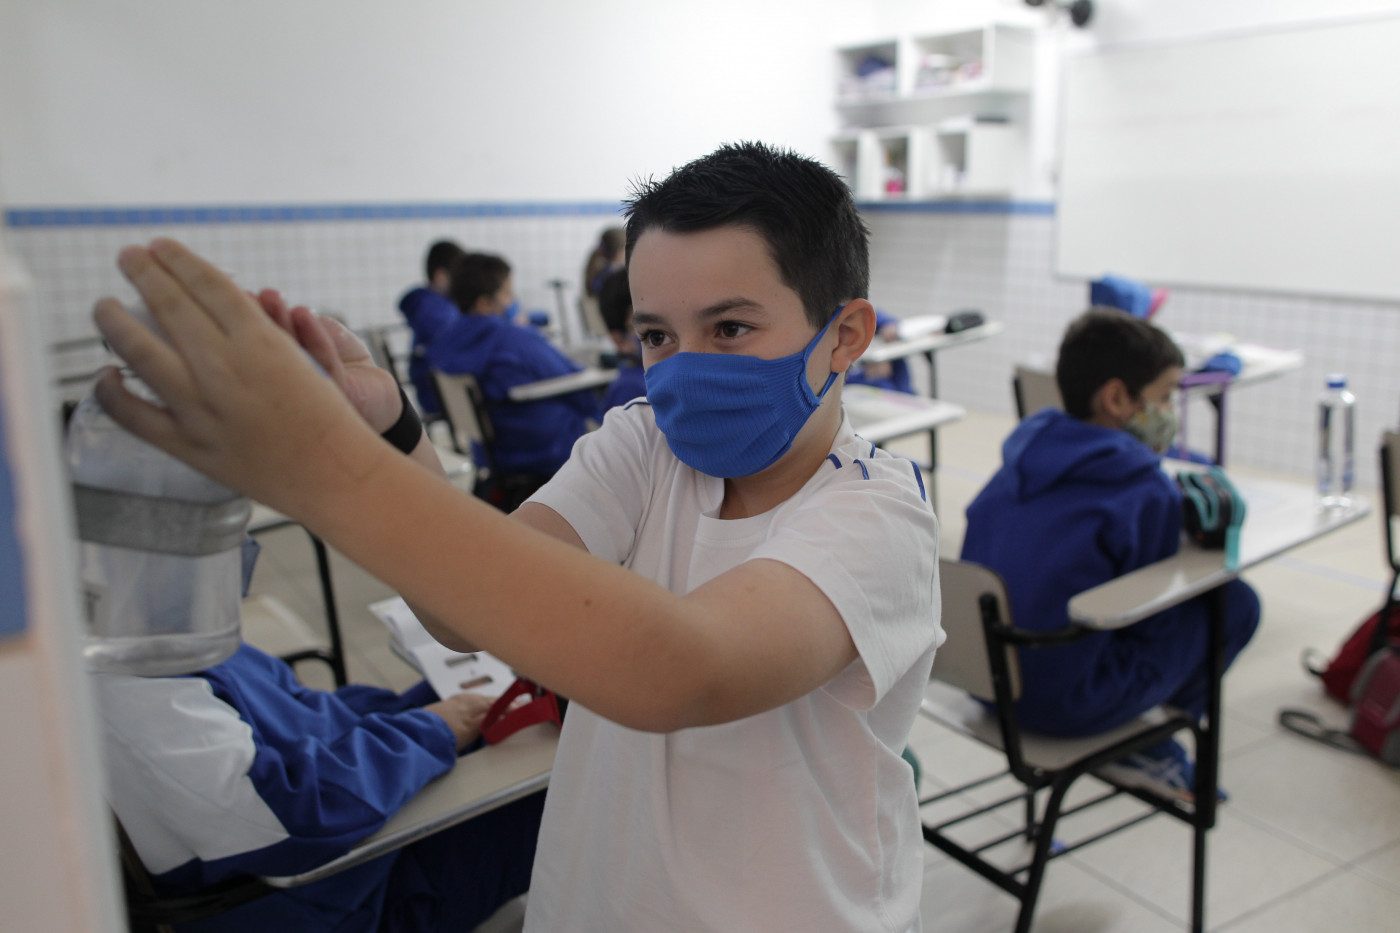 Menino usa máscara de proteção na escola e pega álcool gel